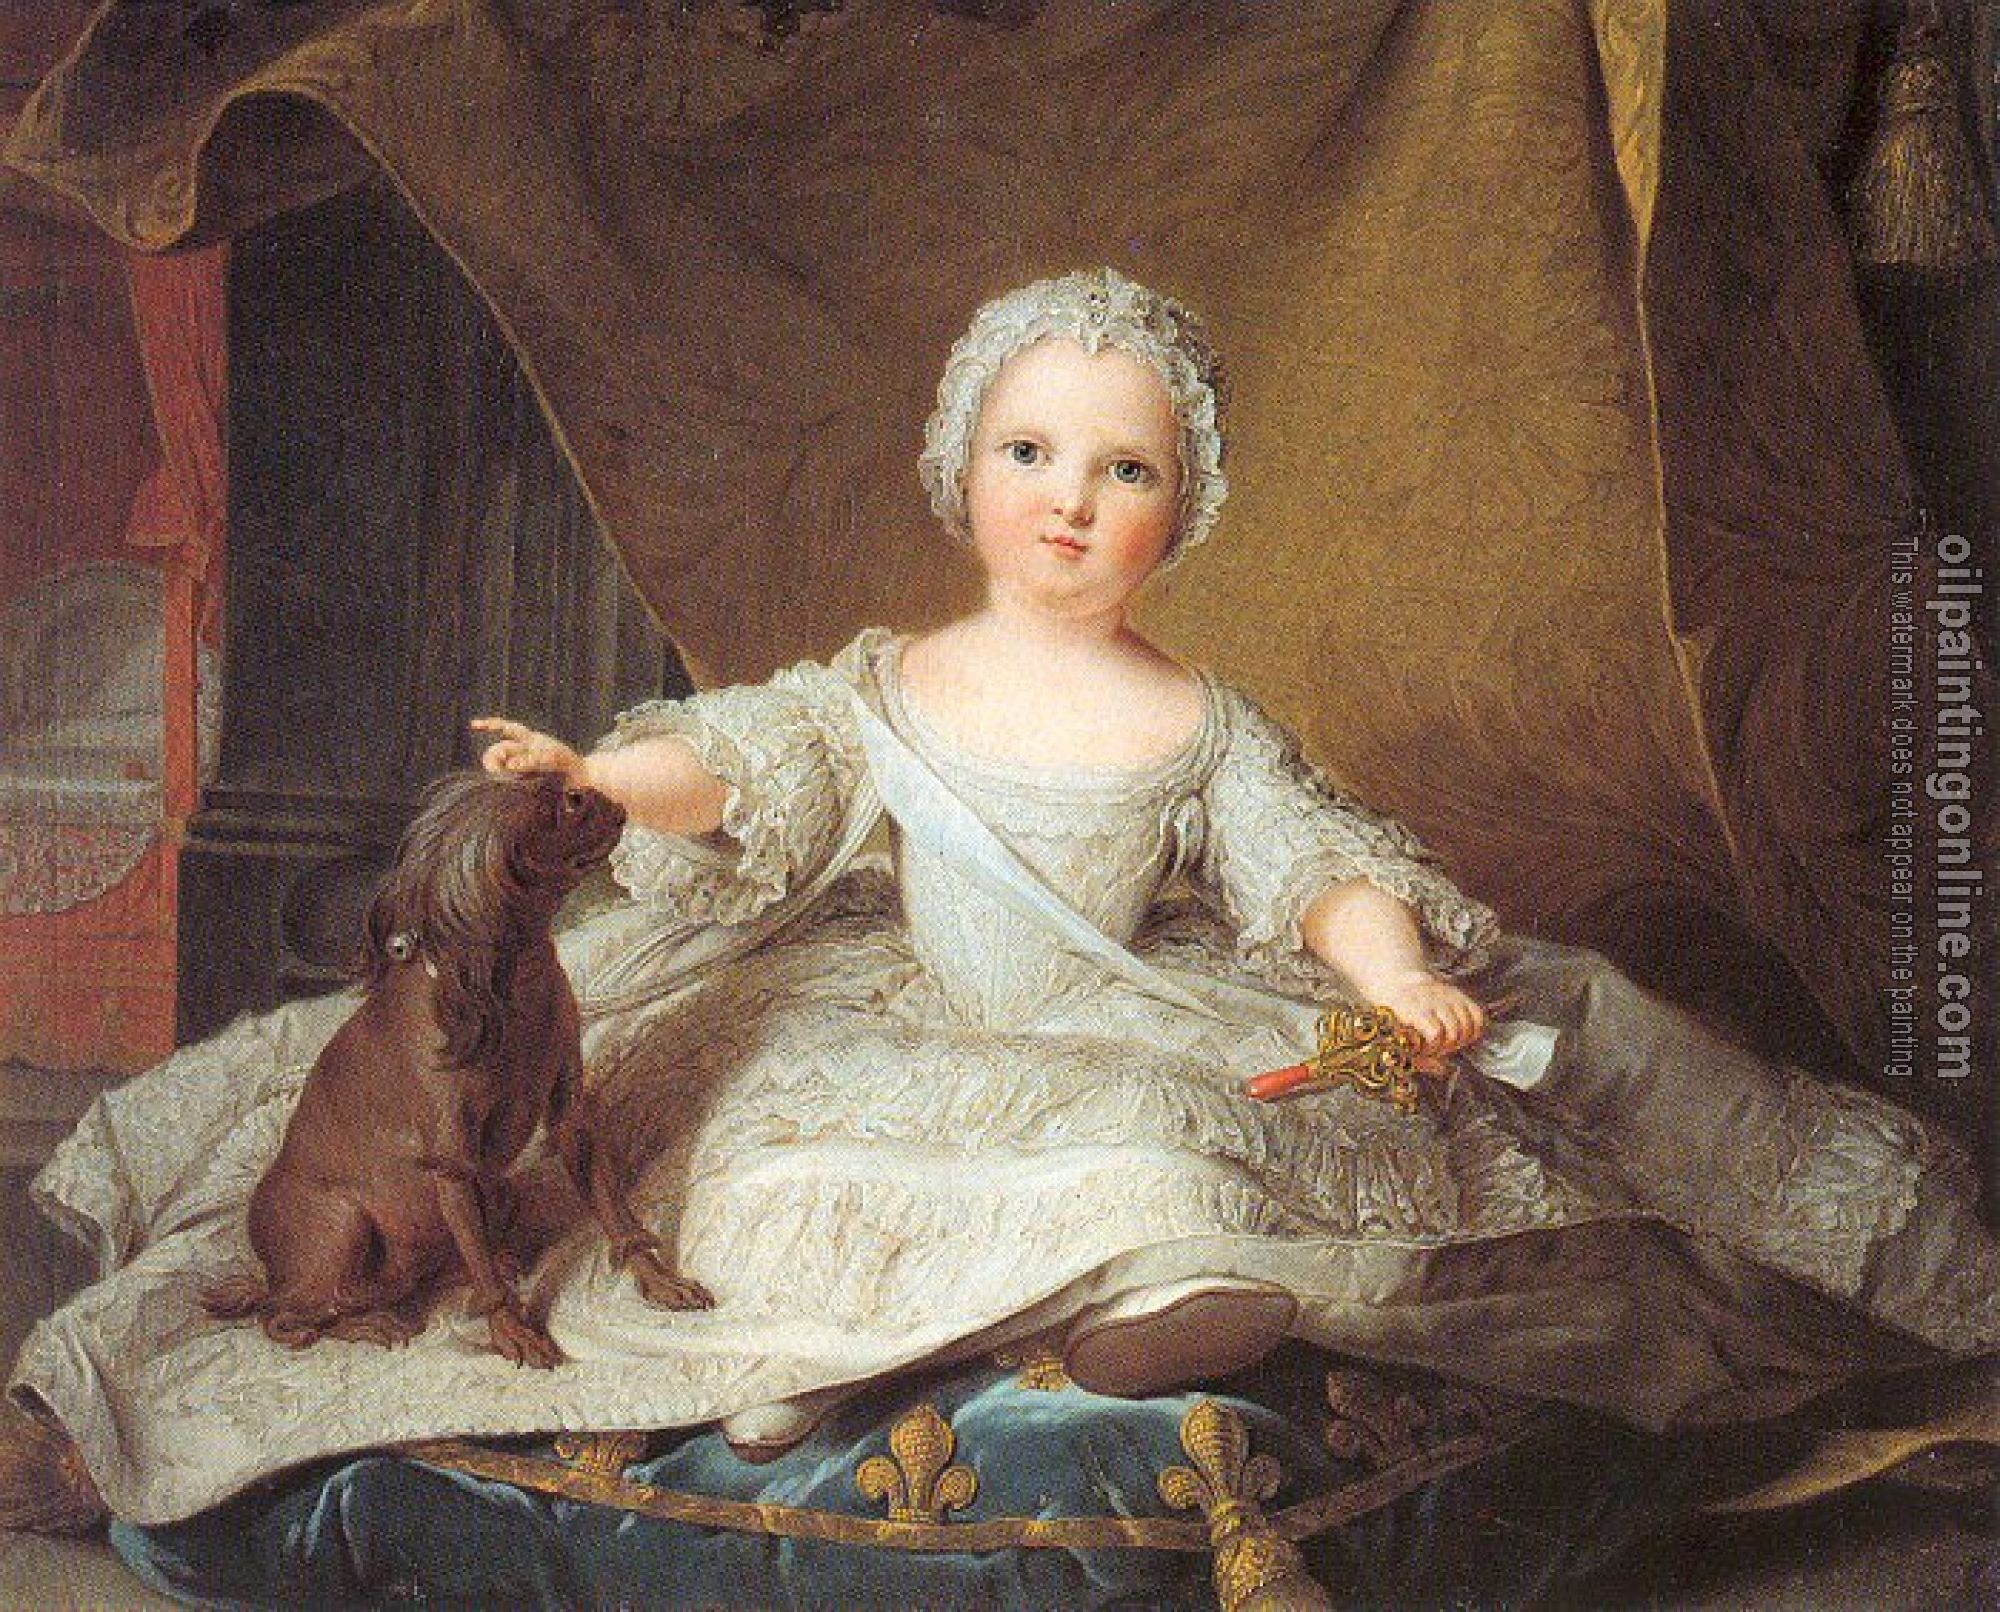 Nattier, Jean Marc - Marie Zephyrine of France as a Baby